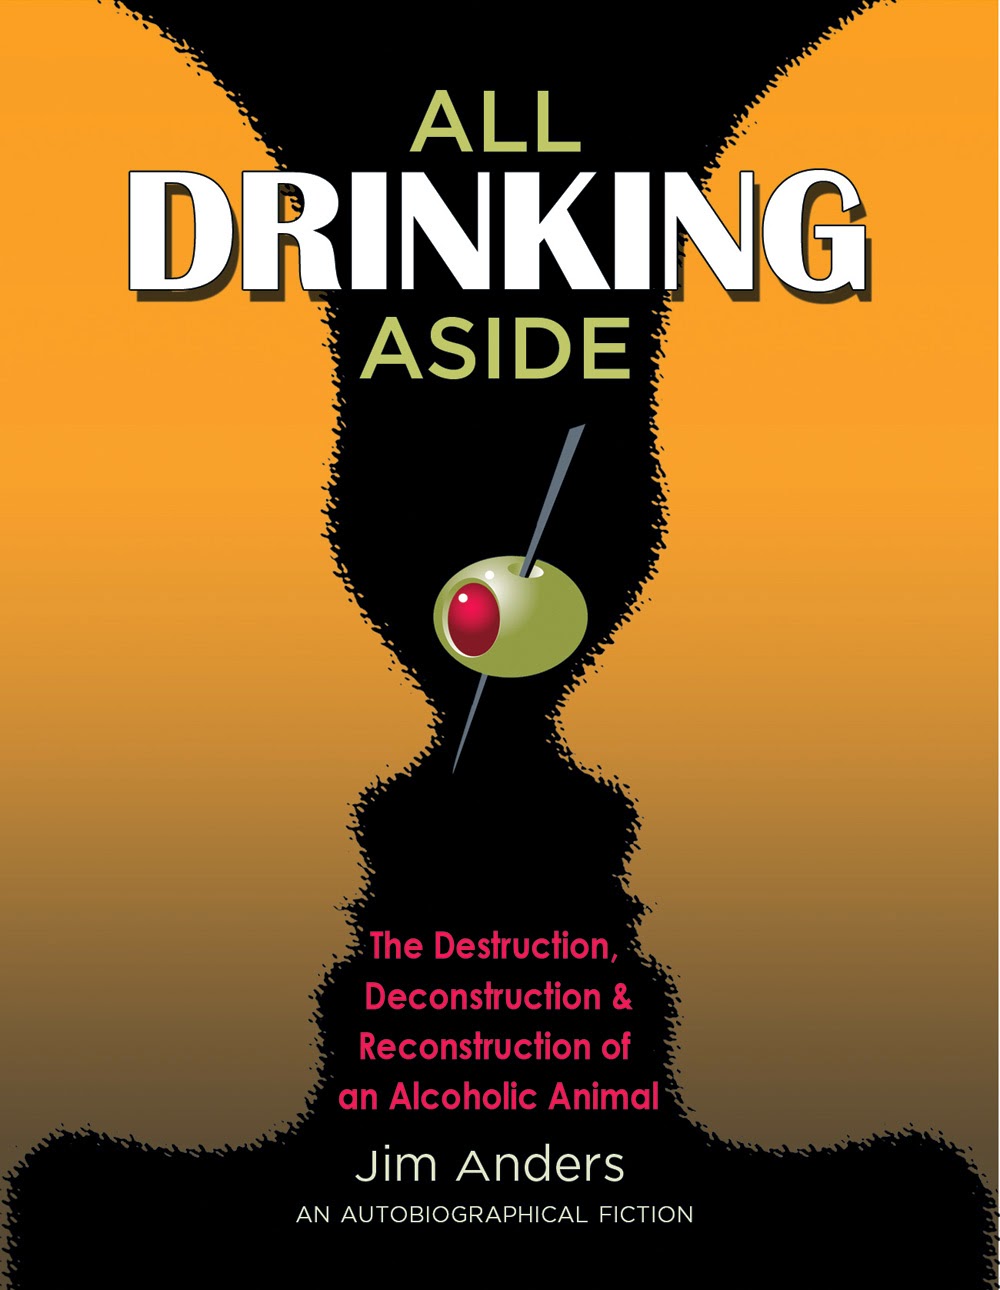 http://www.amazon.com/All-Drinking-Aside-Deconstruction-Reconstruction/dp/149239730X/ref=sr_1_1?ie=UTF8&qid=1383714712&sr=8-1&keywords=all+drinking+aside